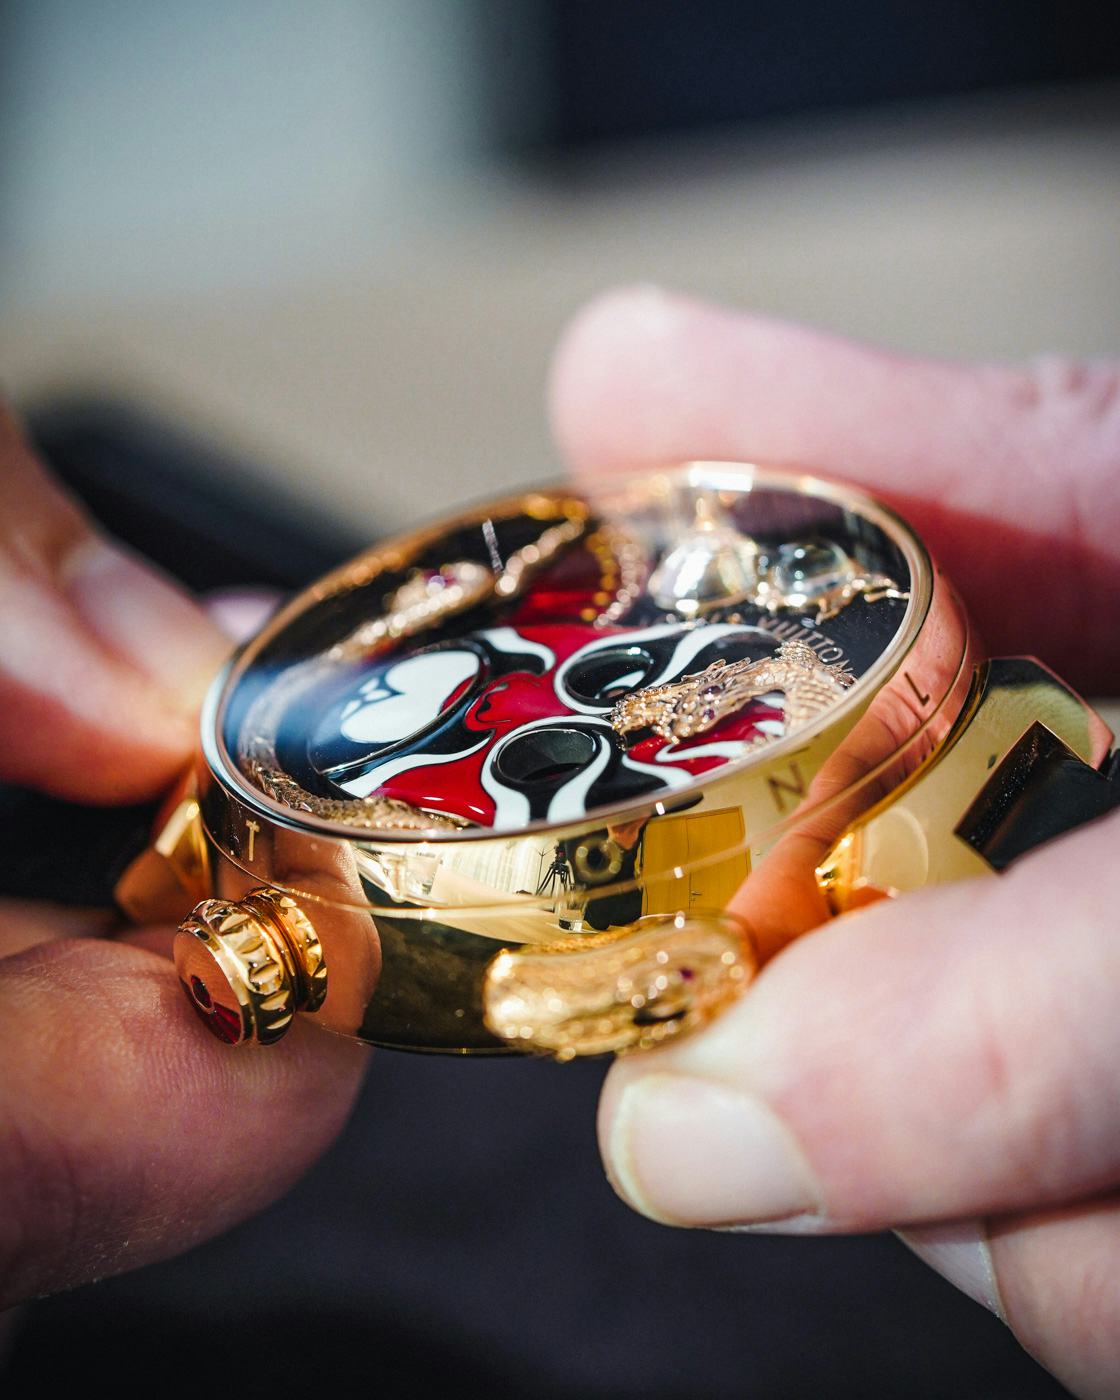 Hands-On: Louis Vuitton Tambour Carpe Diem Automaton Watch